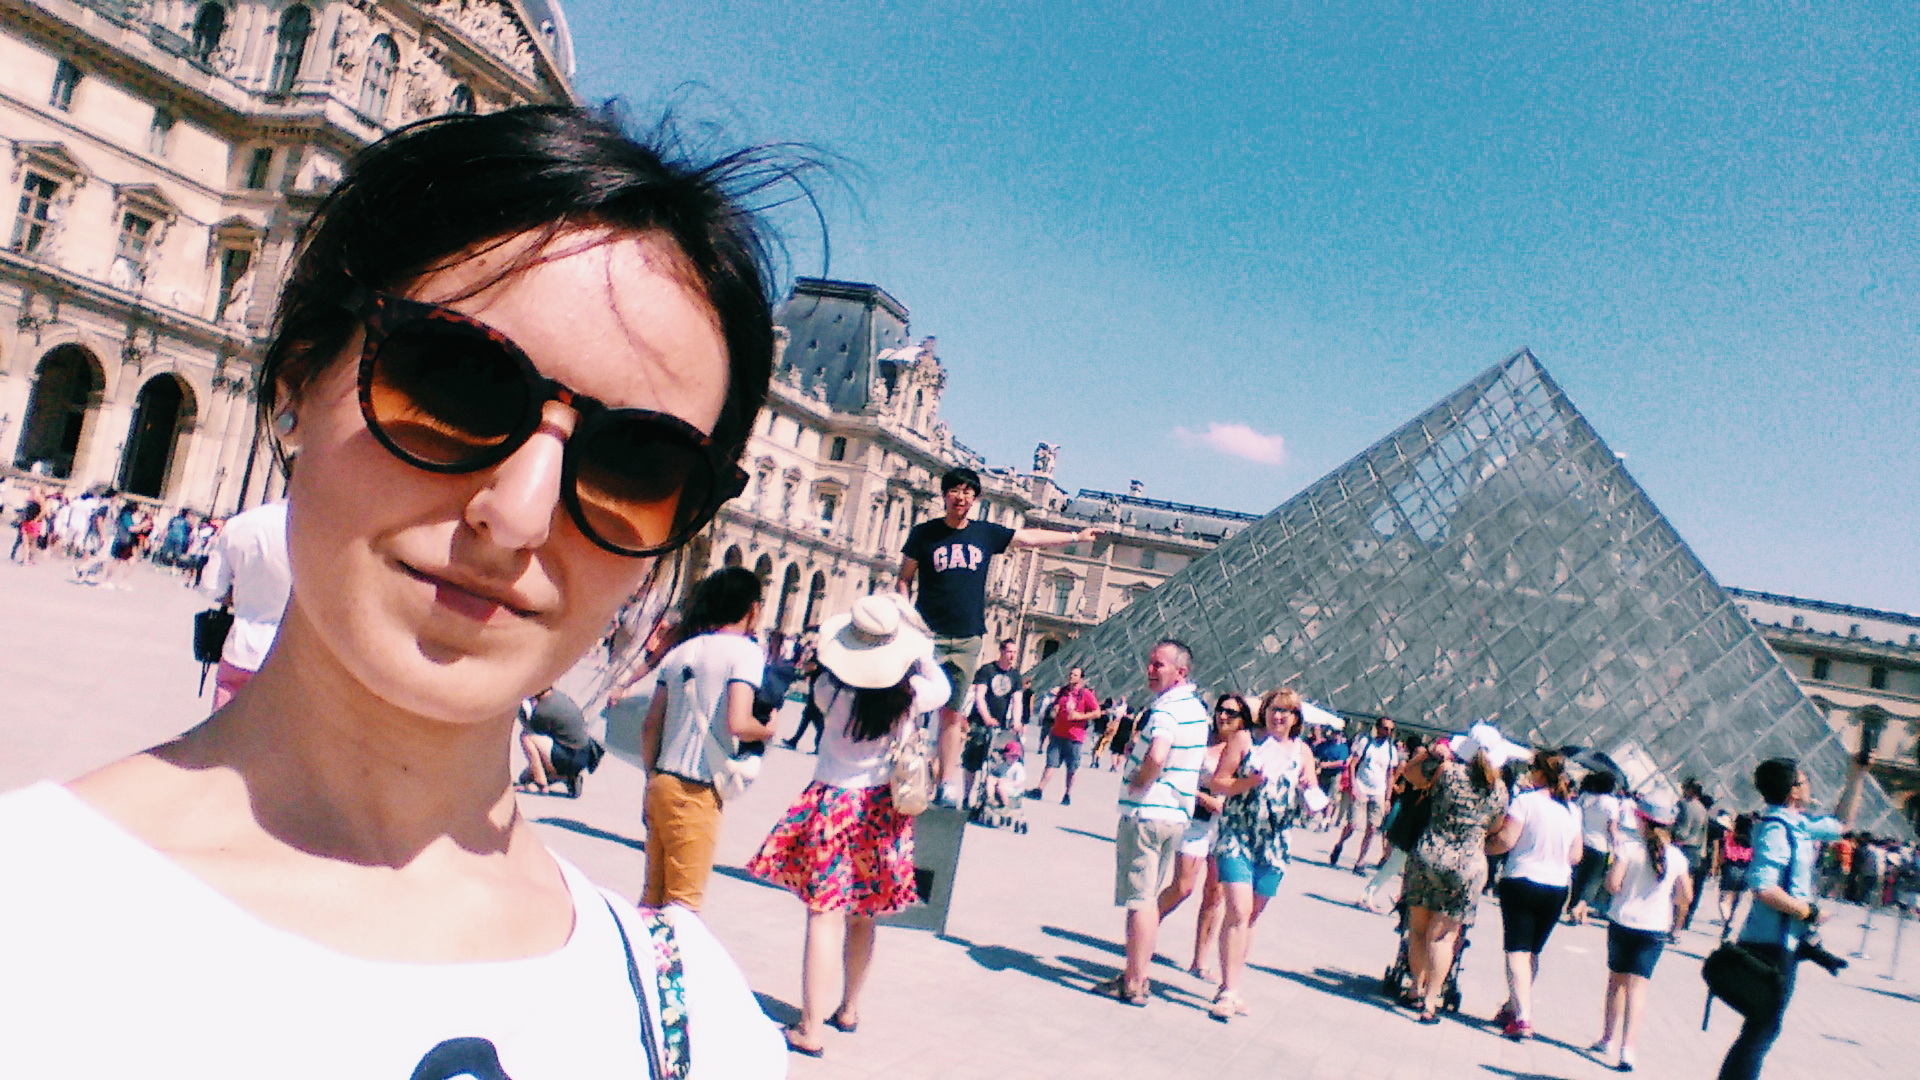 and out comes the girl Parigi Piramide del Louvre